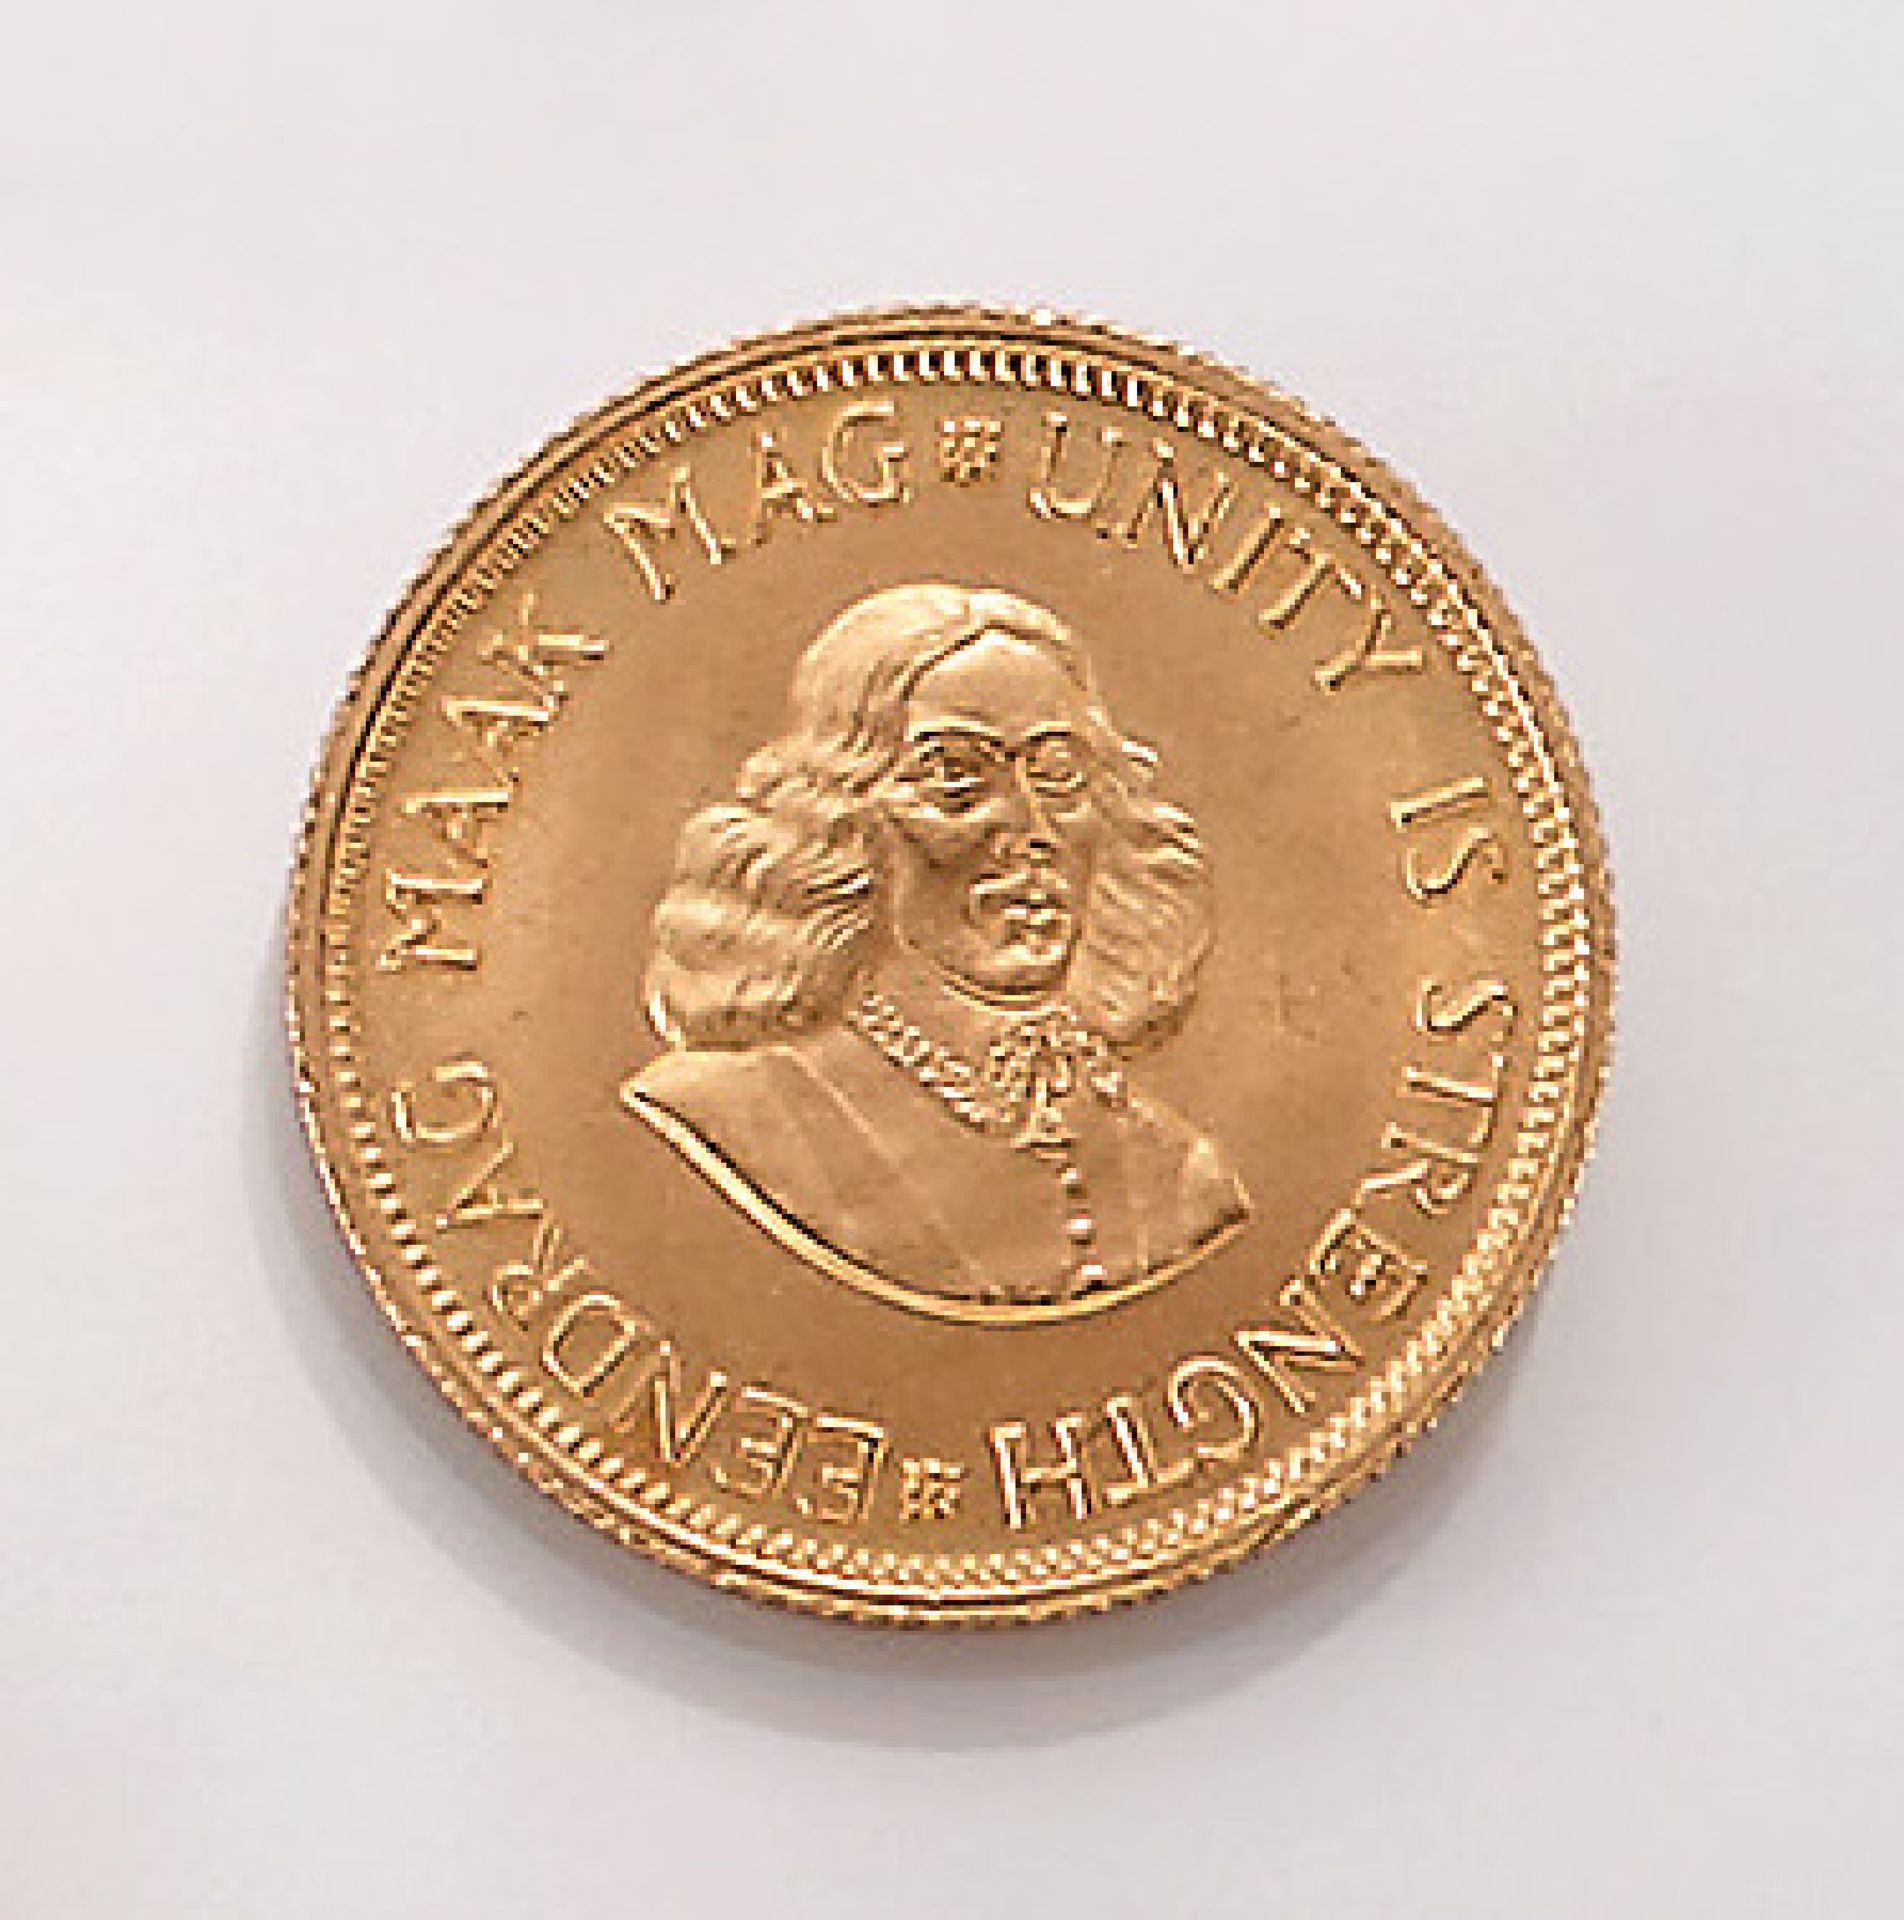 Goldmünze, 2 Rand, Südafrika, 1967, Springbock, Unity is strength, Eendrag Maak MagGold coin, 2